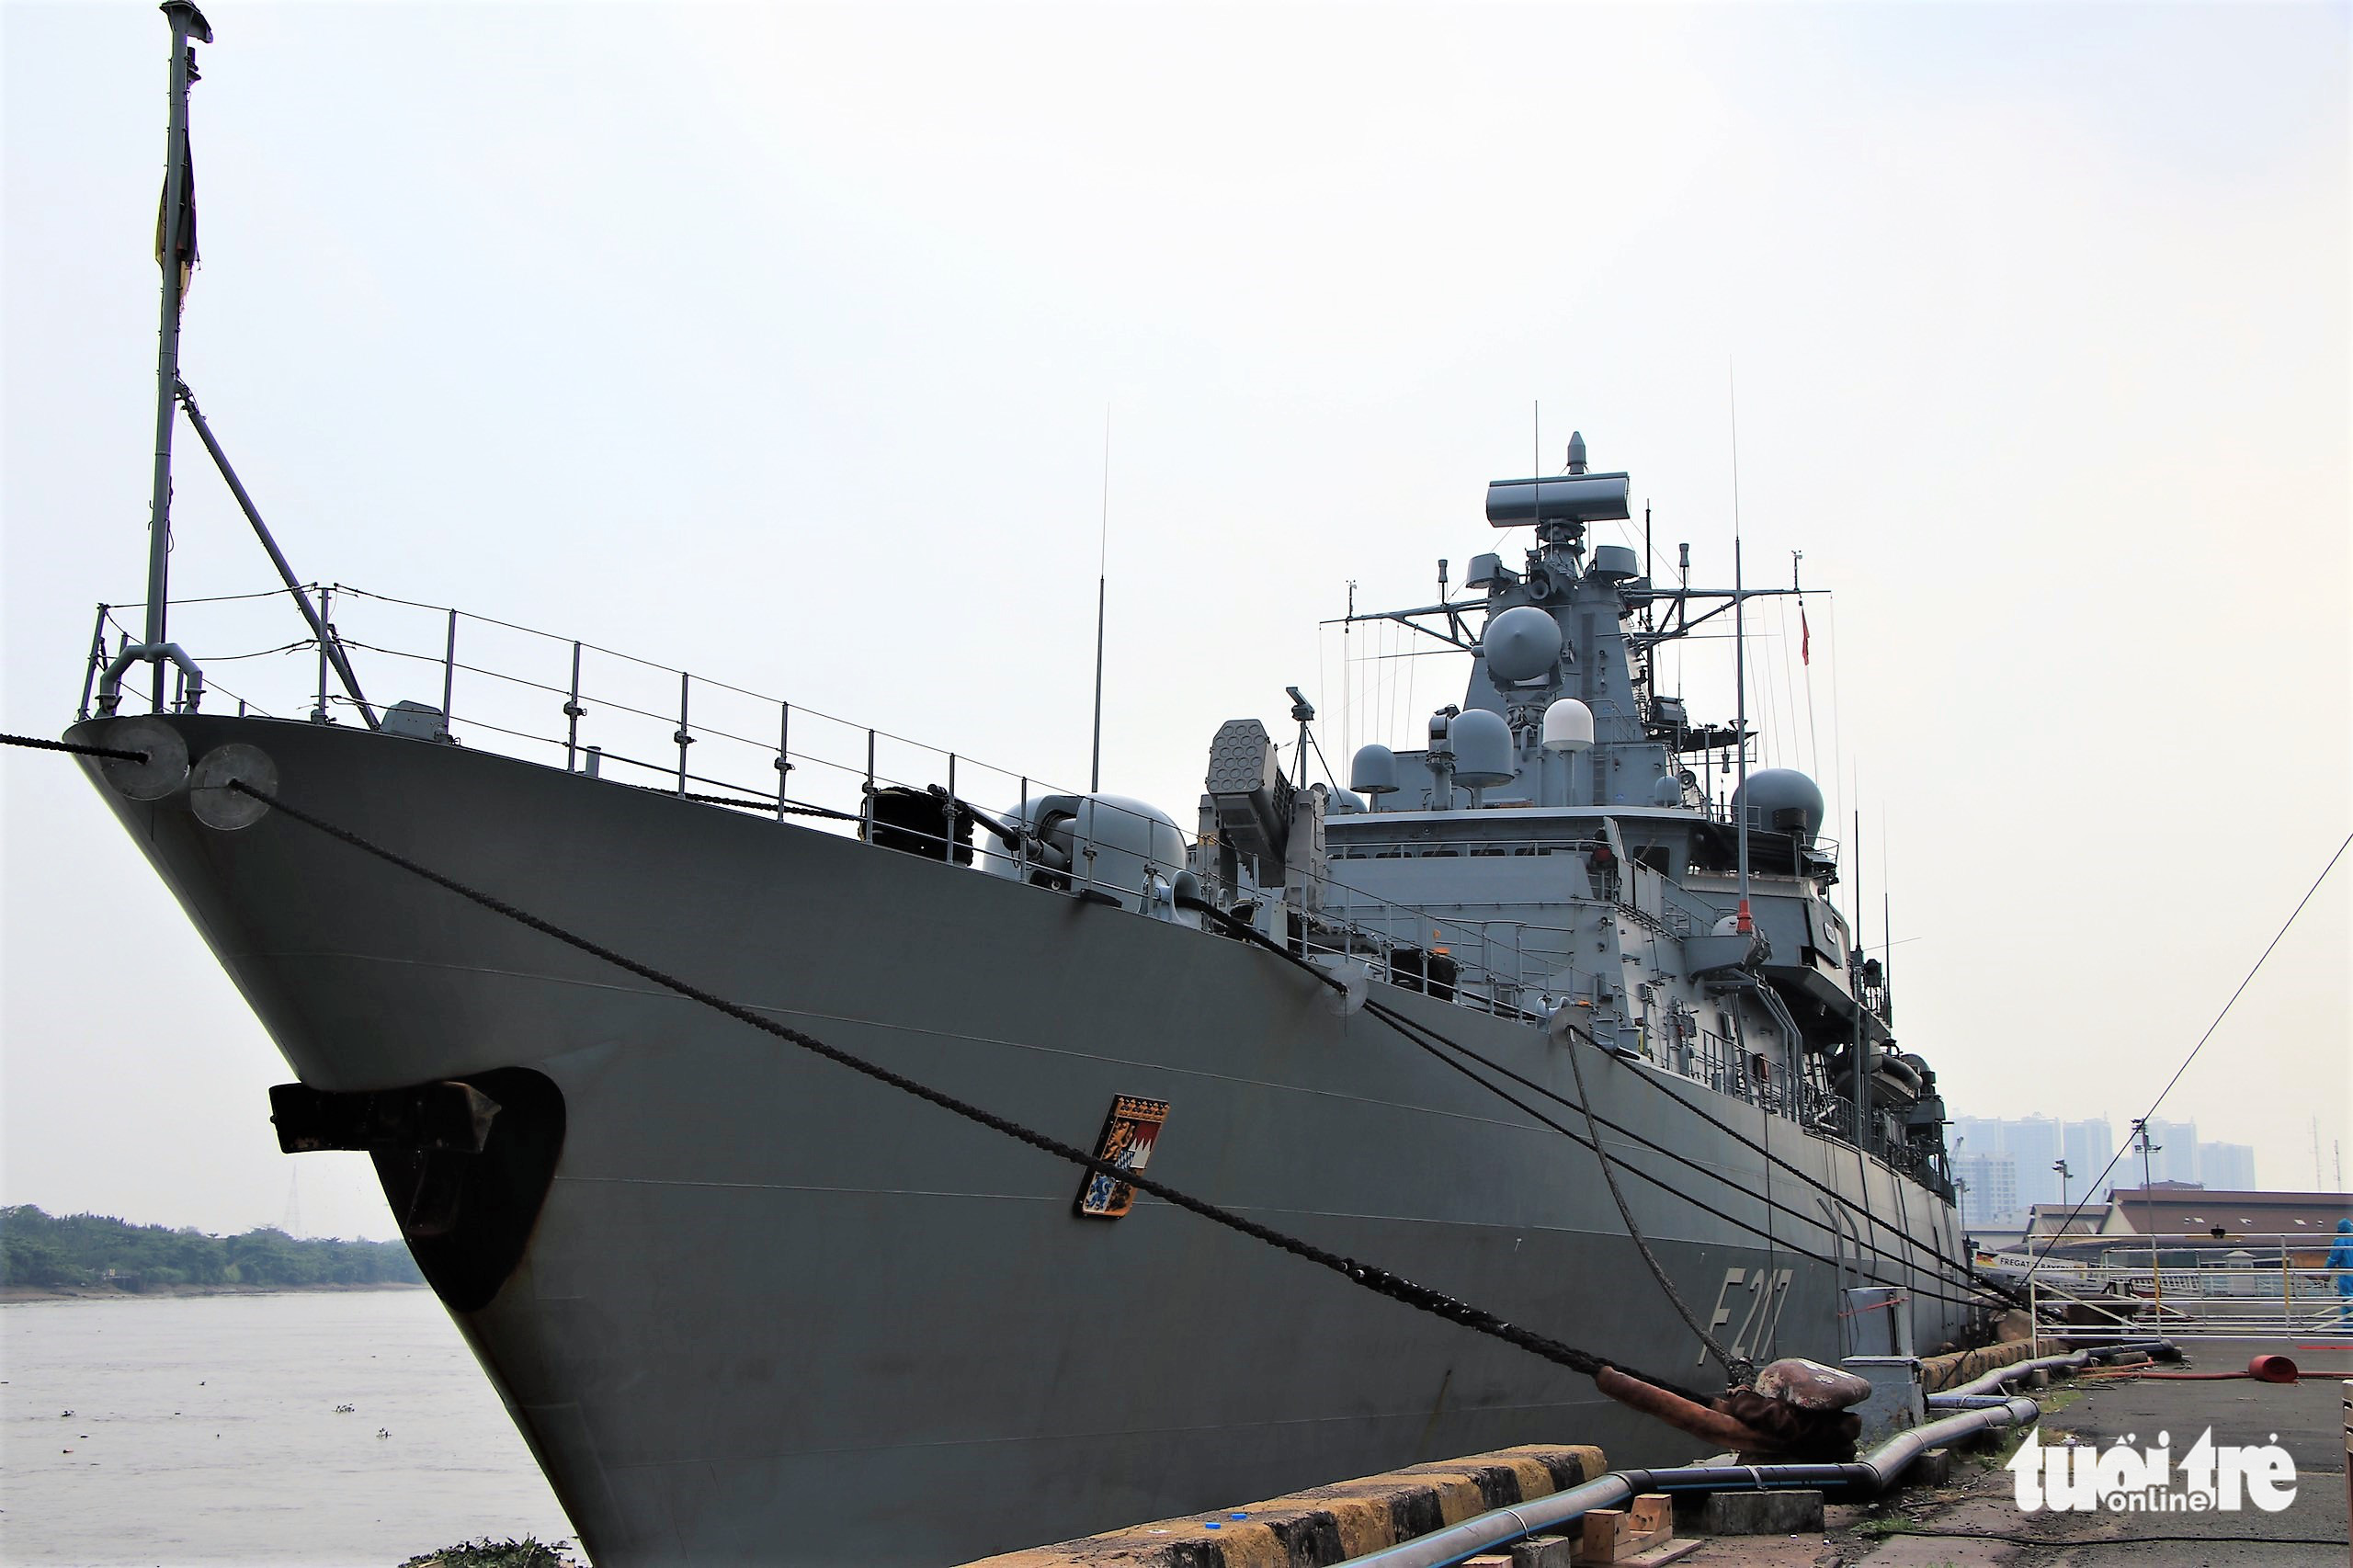 German naval frigate pays first visit to Vietnam